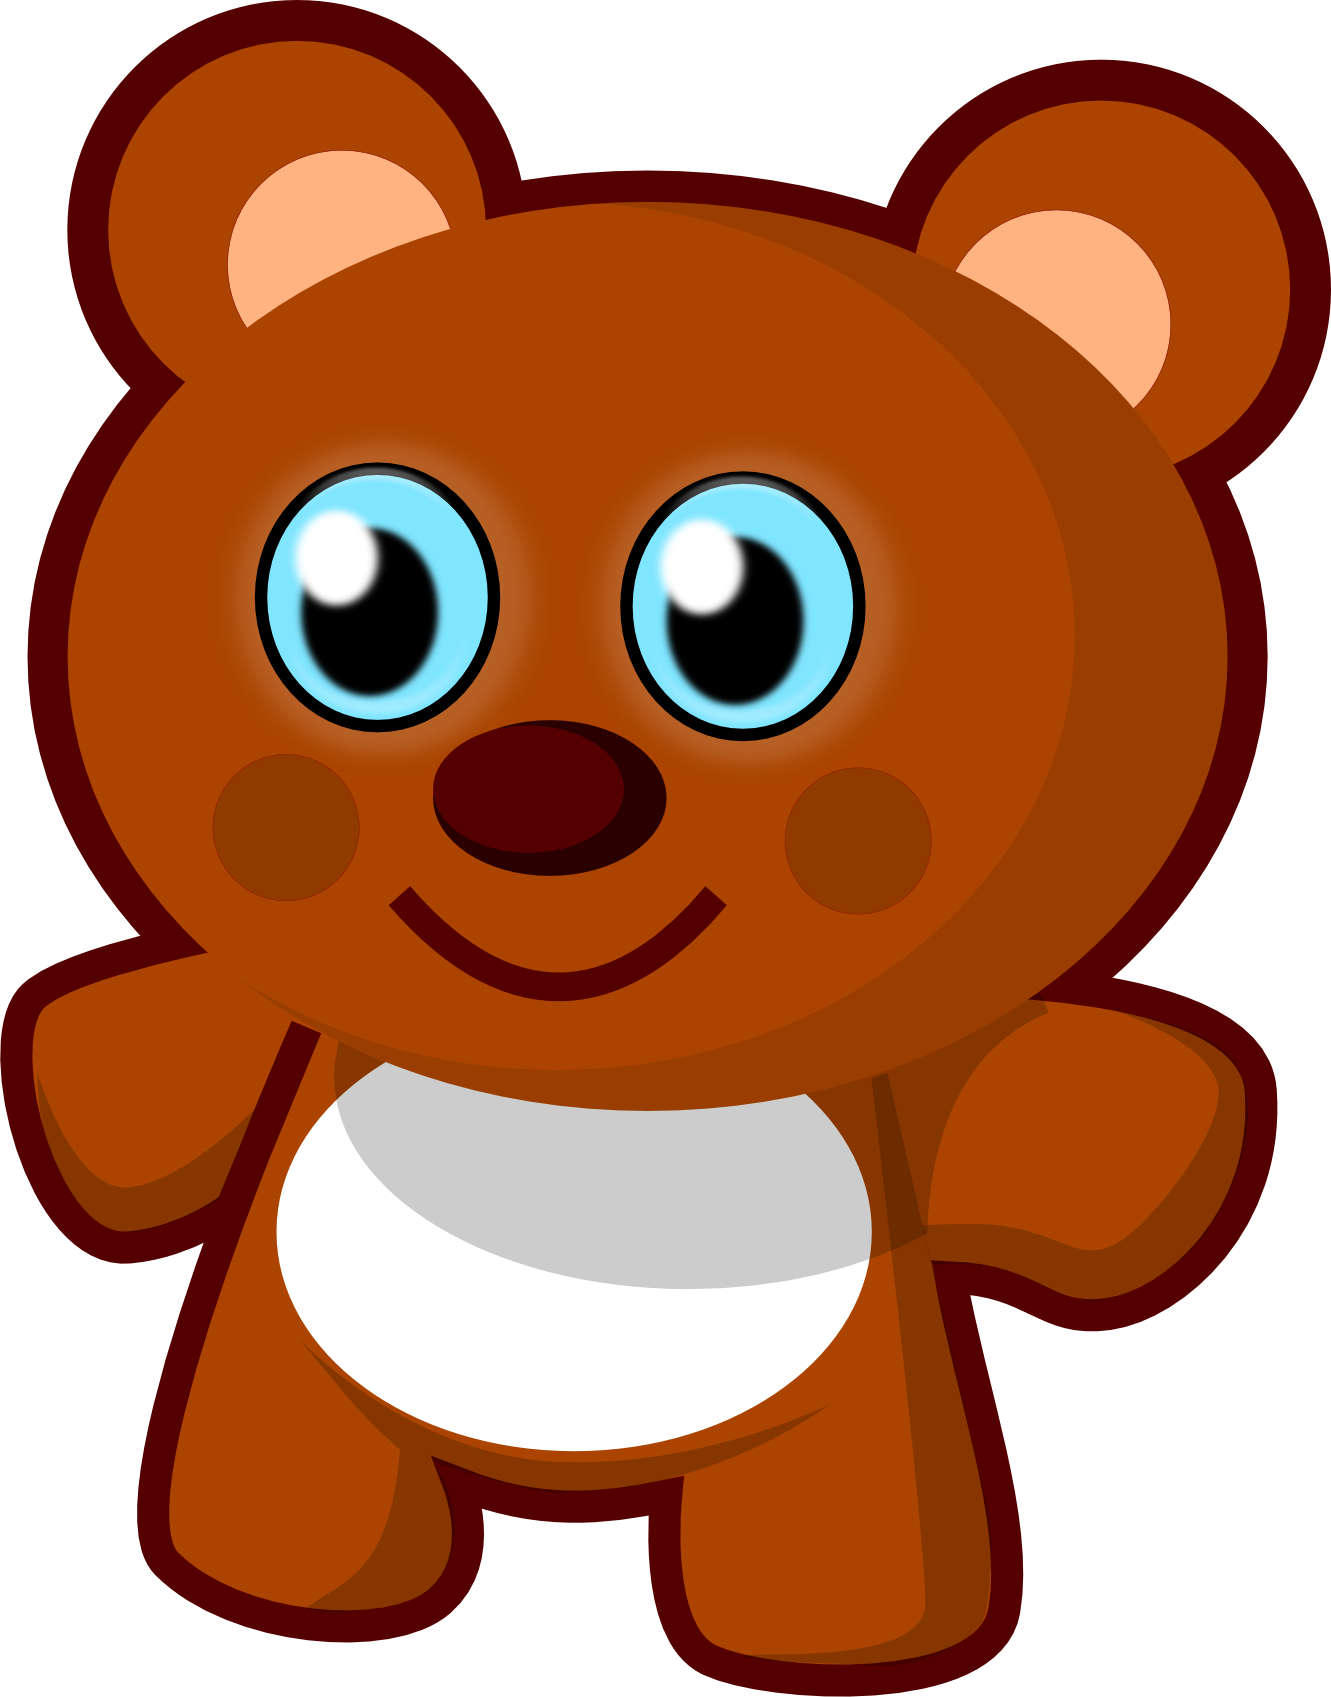 clipart image of teddy bear - photo #49